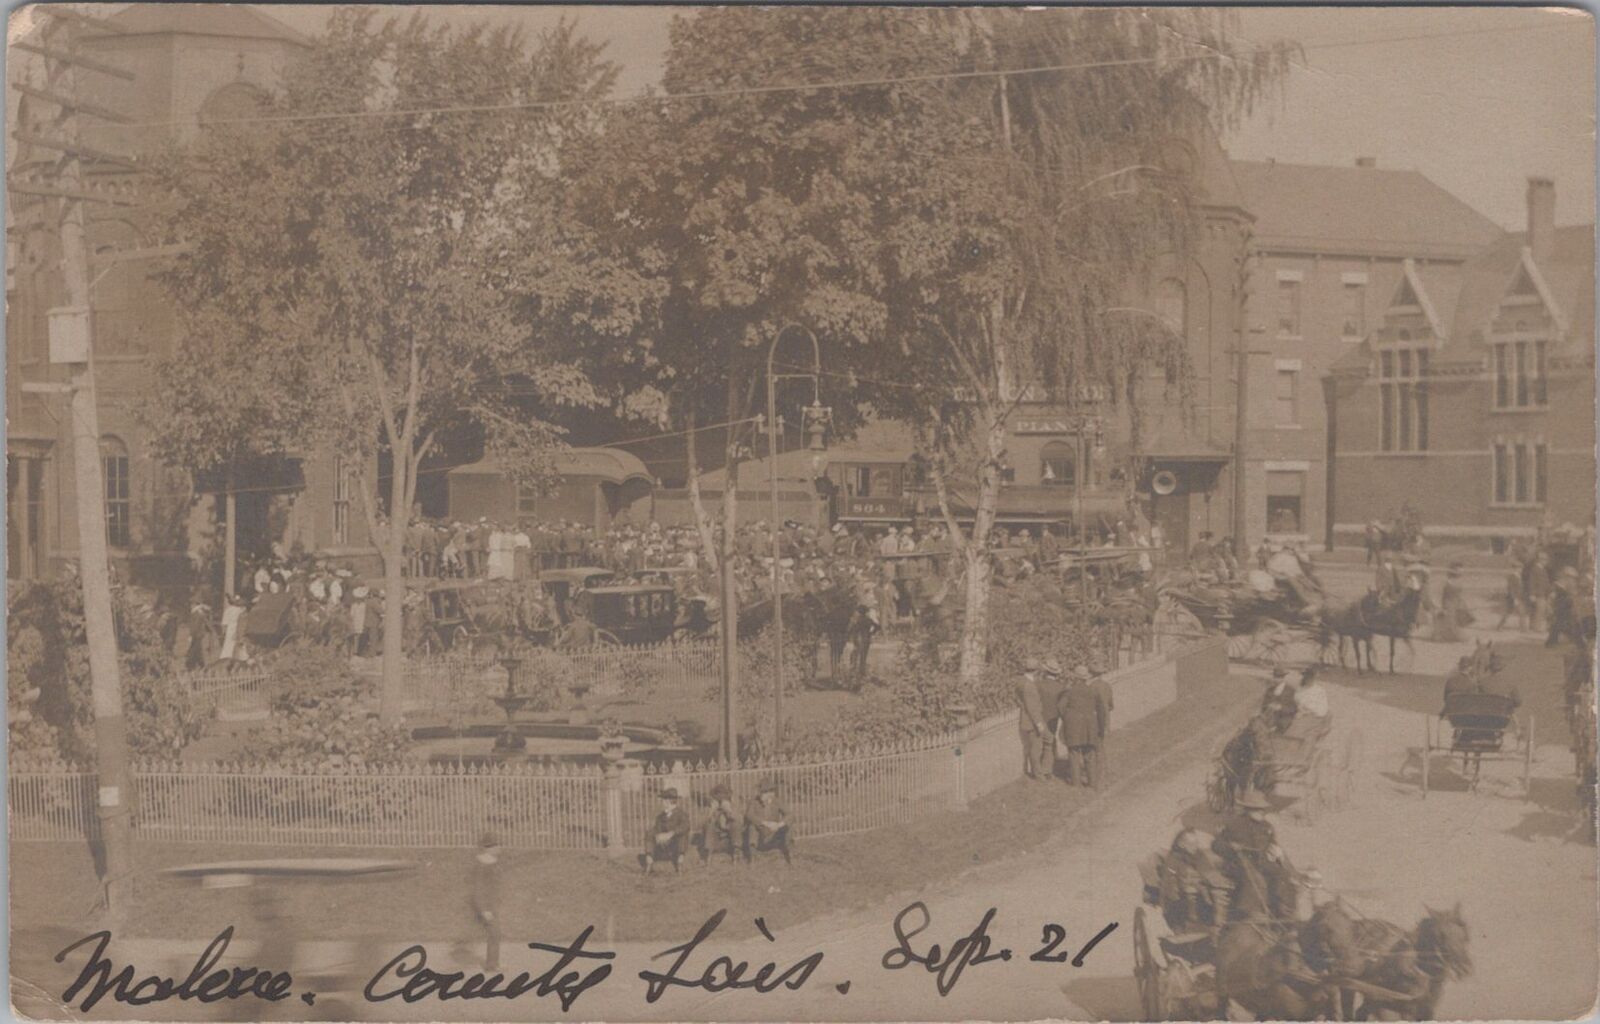 Malone New York County Fair Train Engine Crowd Gathering 1905 RPPC Postcard